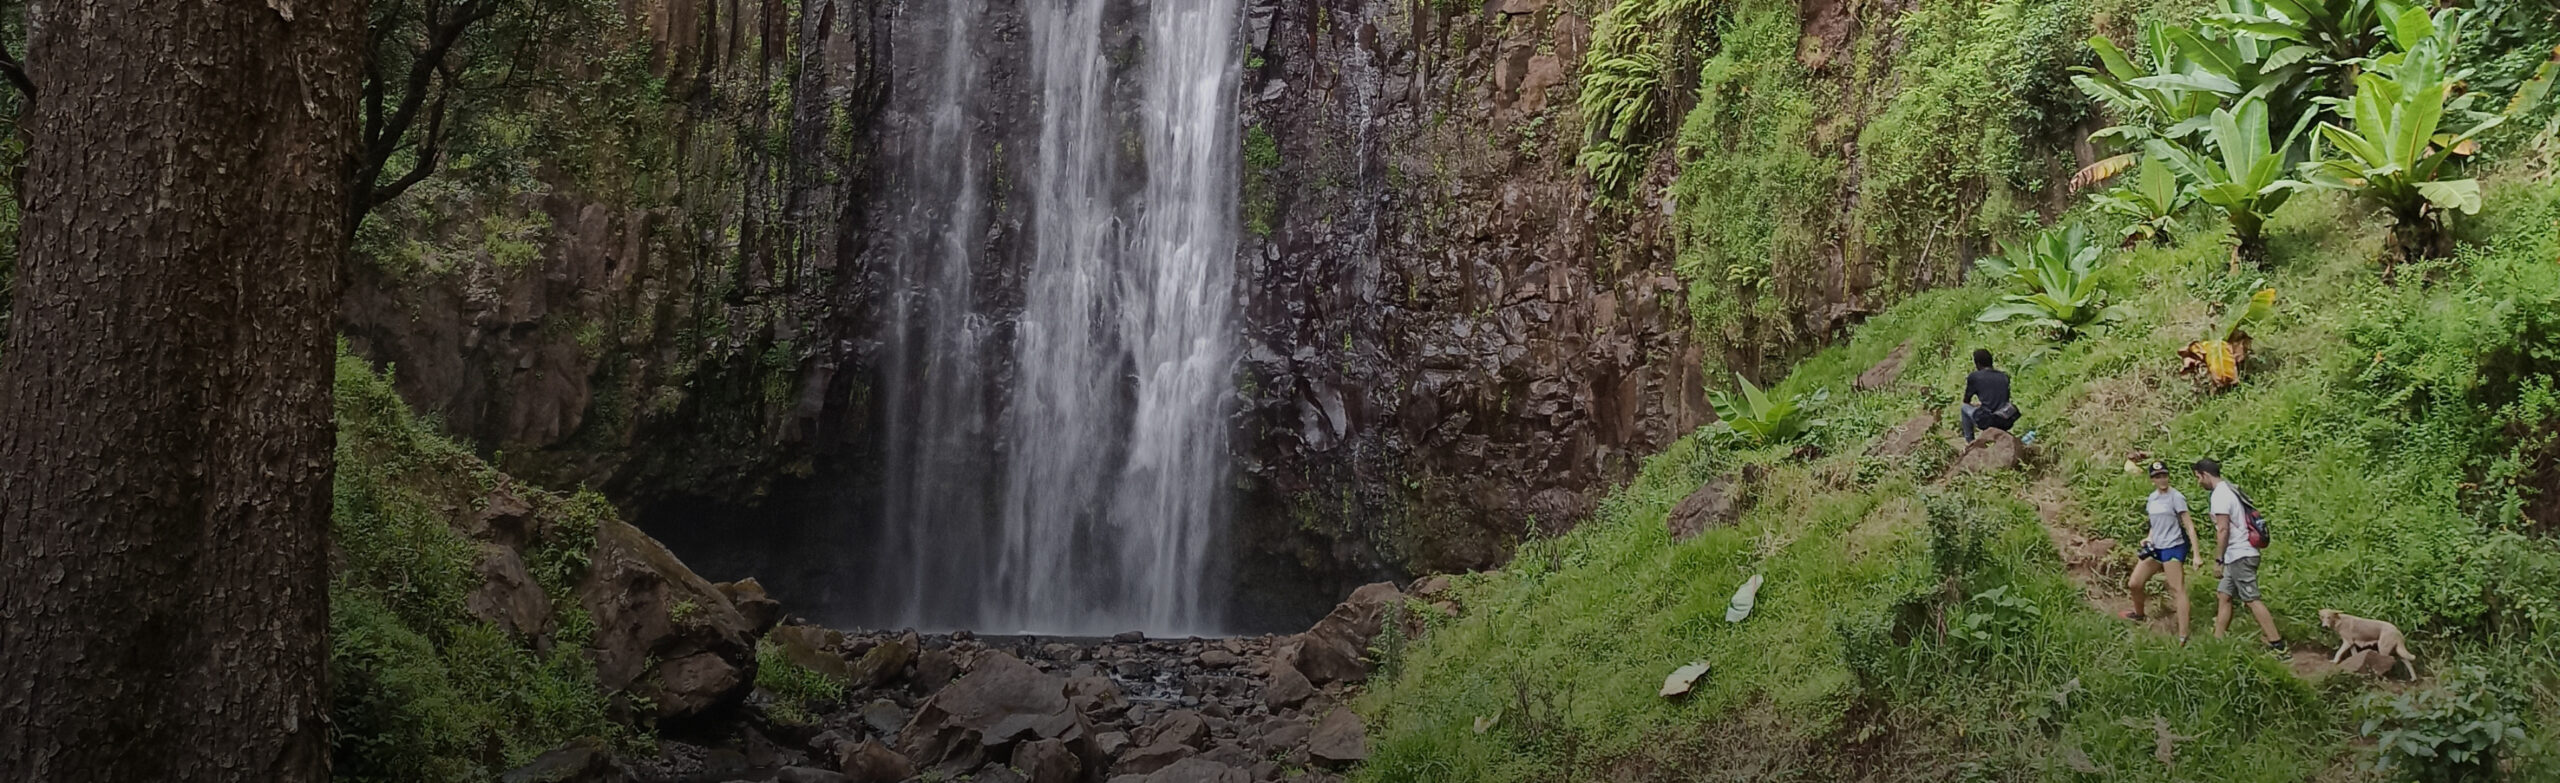 Mount Meru Waterfall In Arusha